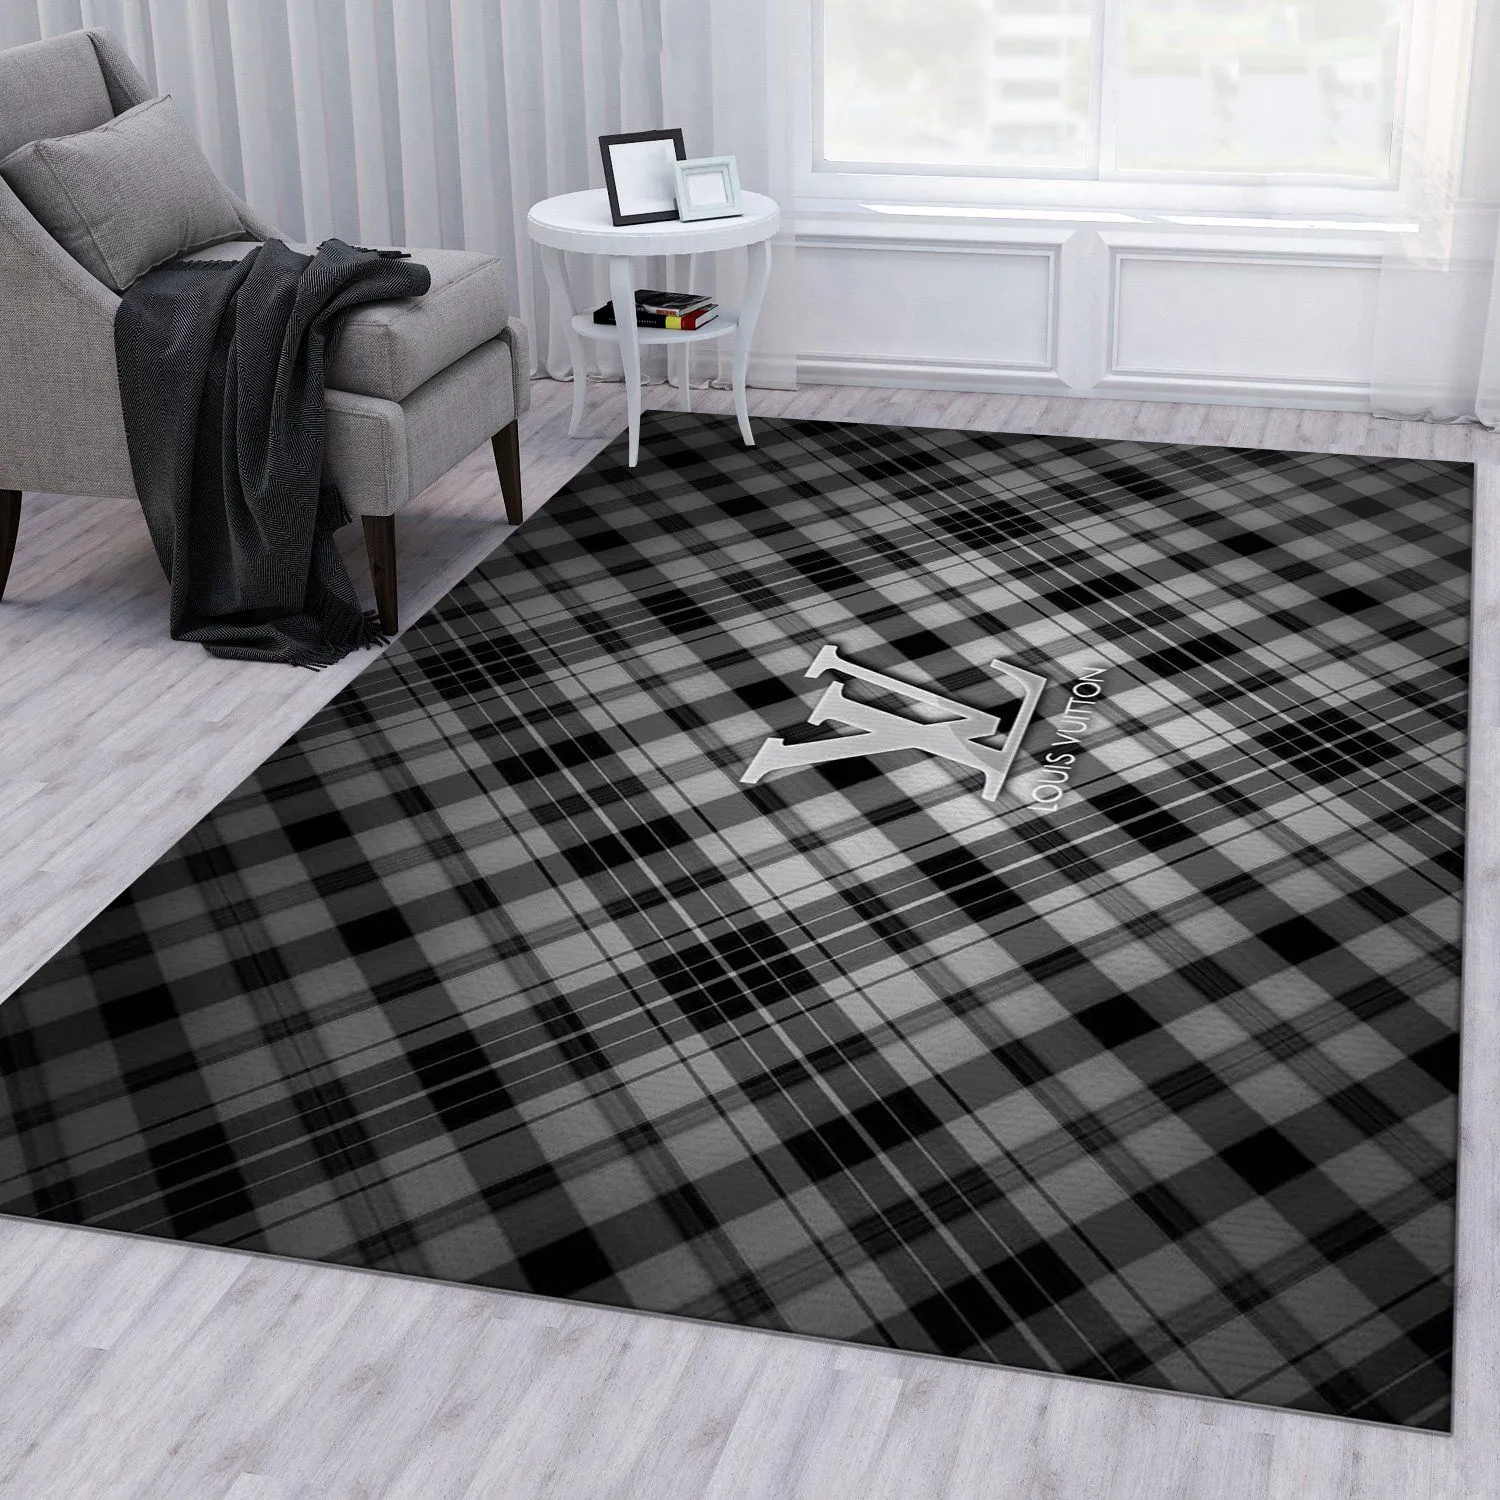 Burberry ft louis vuitton Rectangle Rug Home Decor Luxury Area Carpet Fashion Brand Door Mat